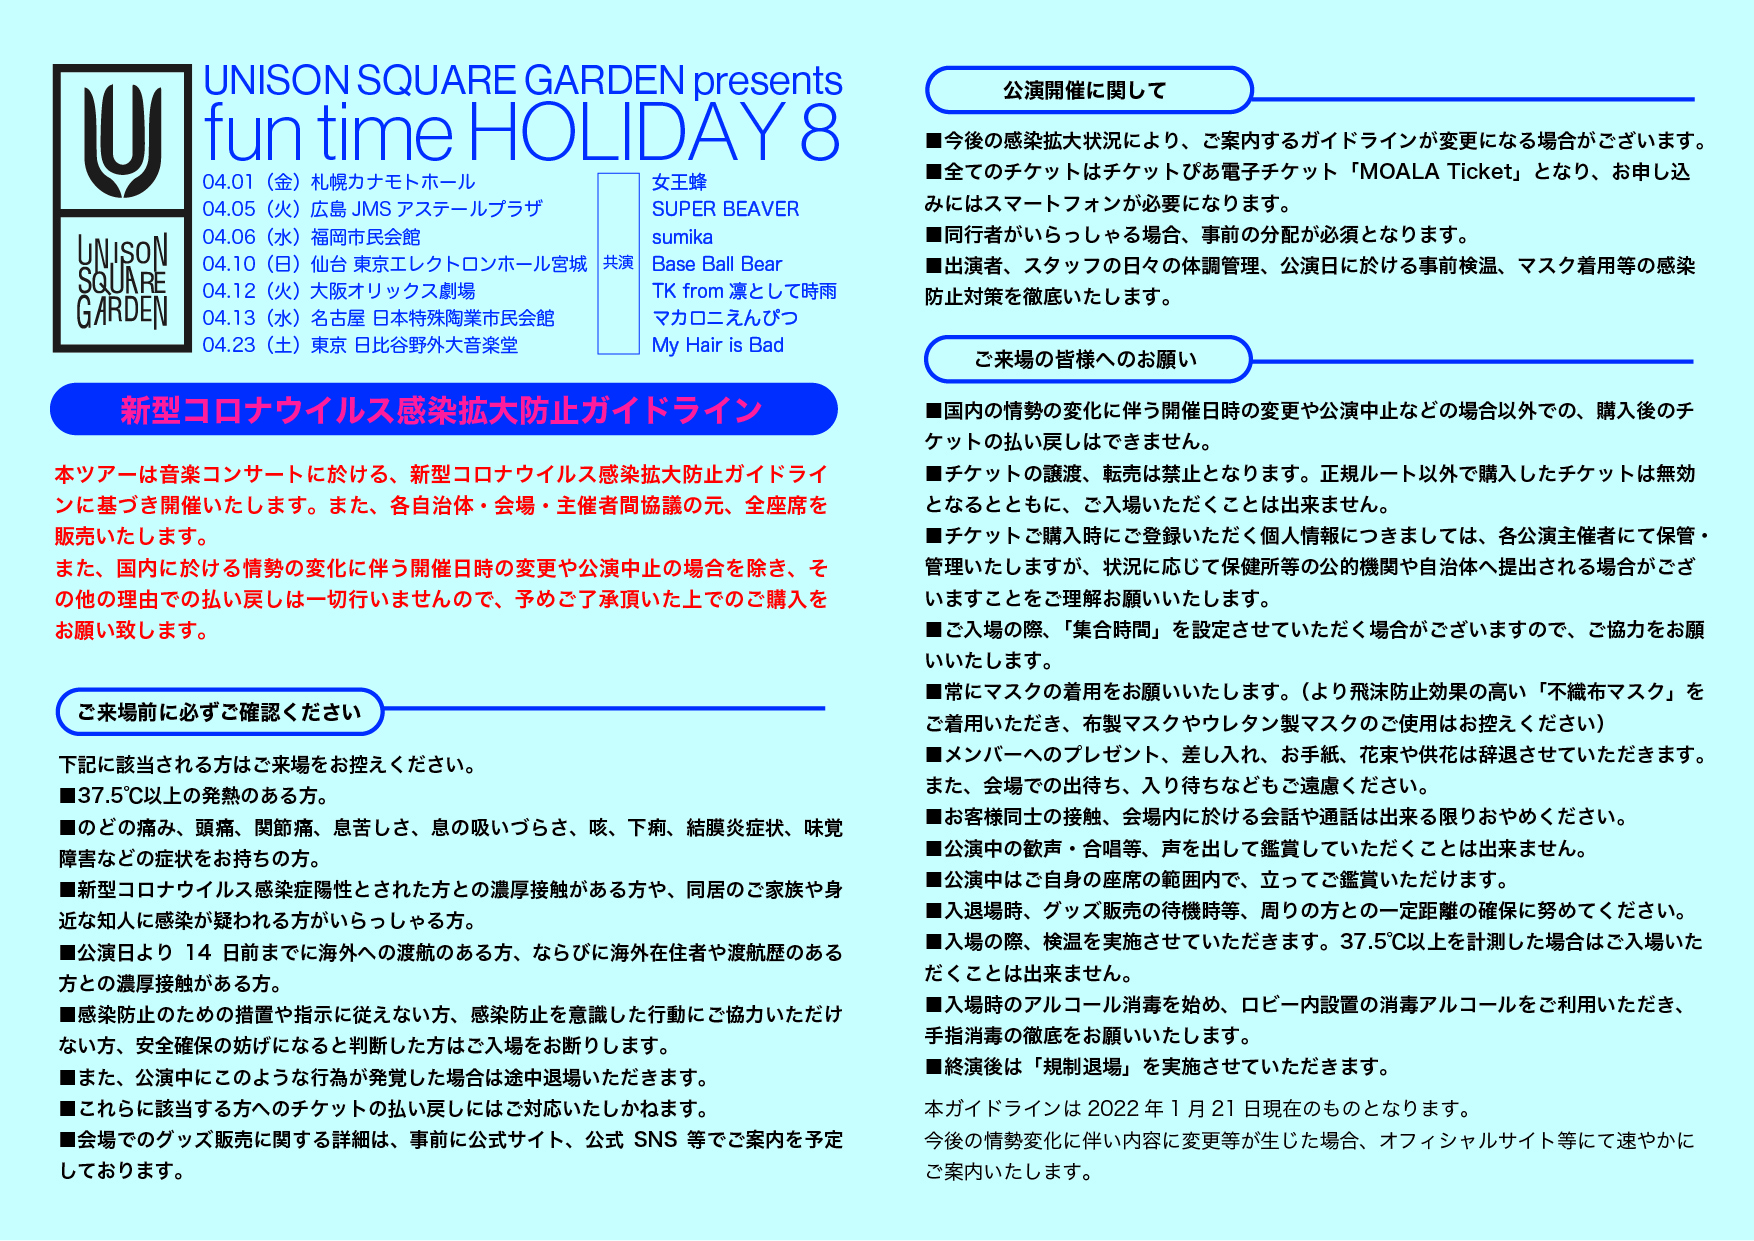 UNISON SQUARE GARDEN 3/2 大阪 チケット32会場